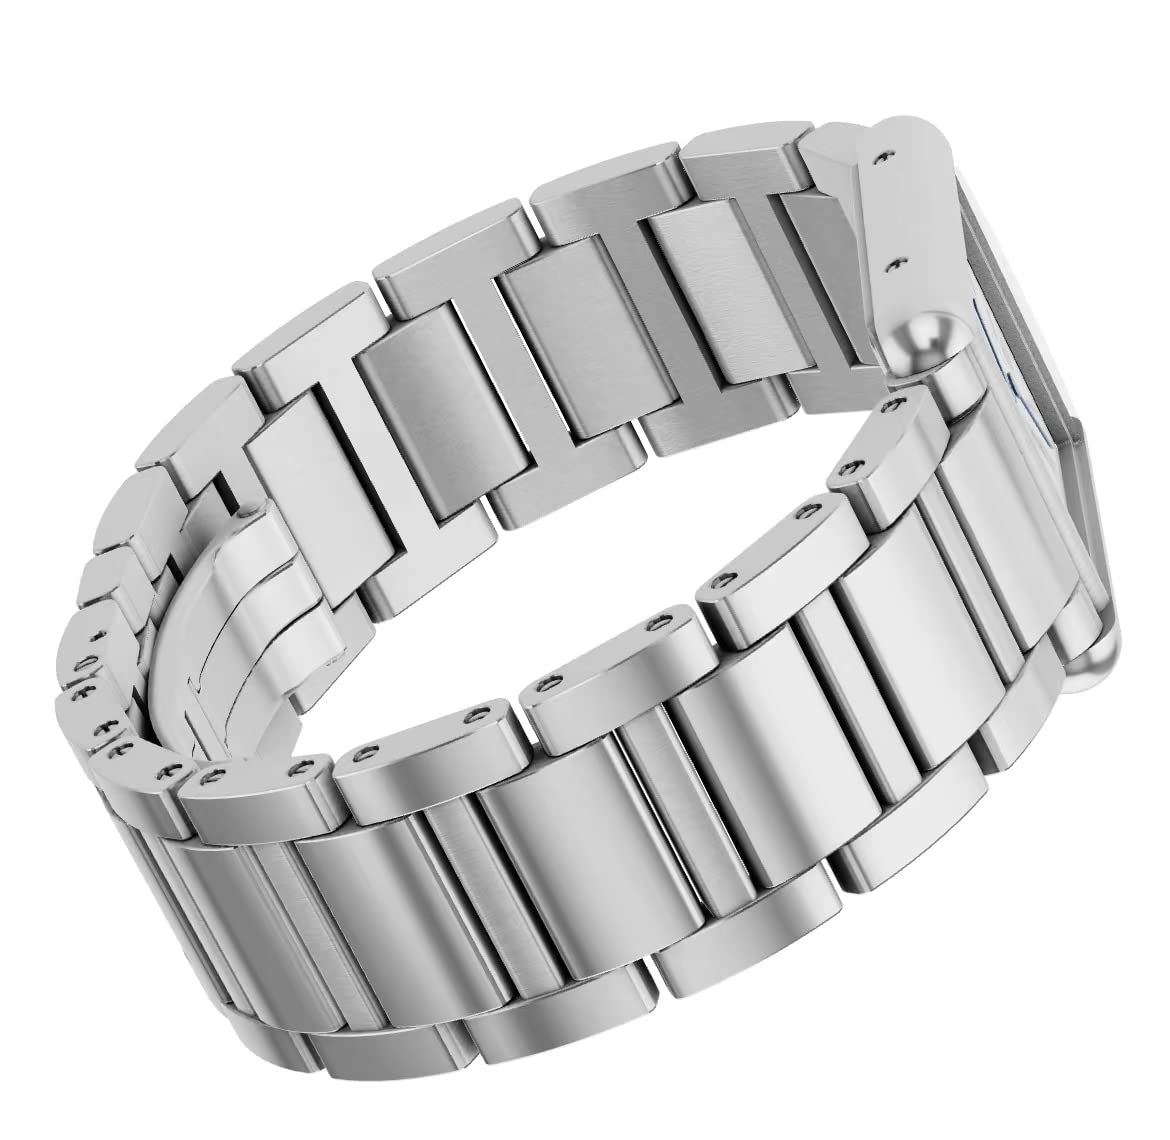 FERNBE Stainless Steel Watch Band For Cartier-TANK series 15mm 20mm Butterfly Clasp Strap Loop Wrist Belt Bracelet Hidden Clasp